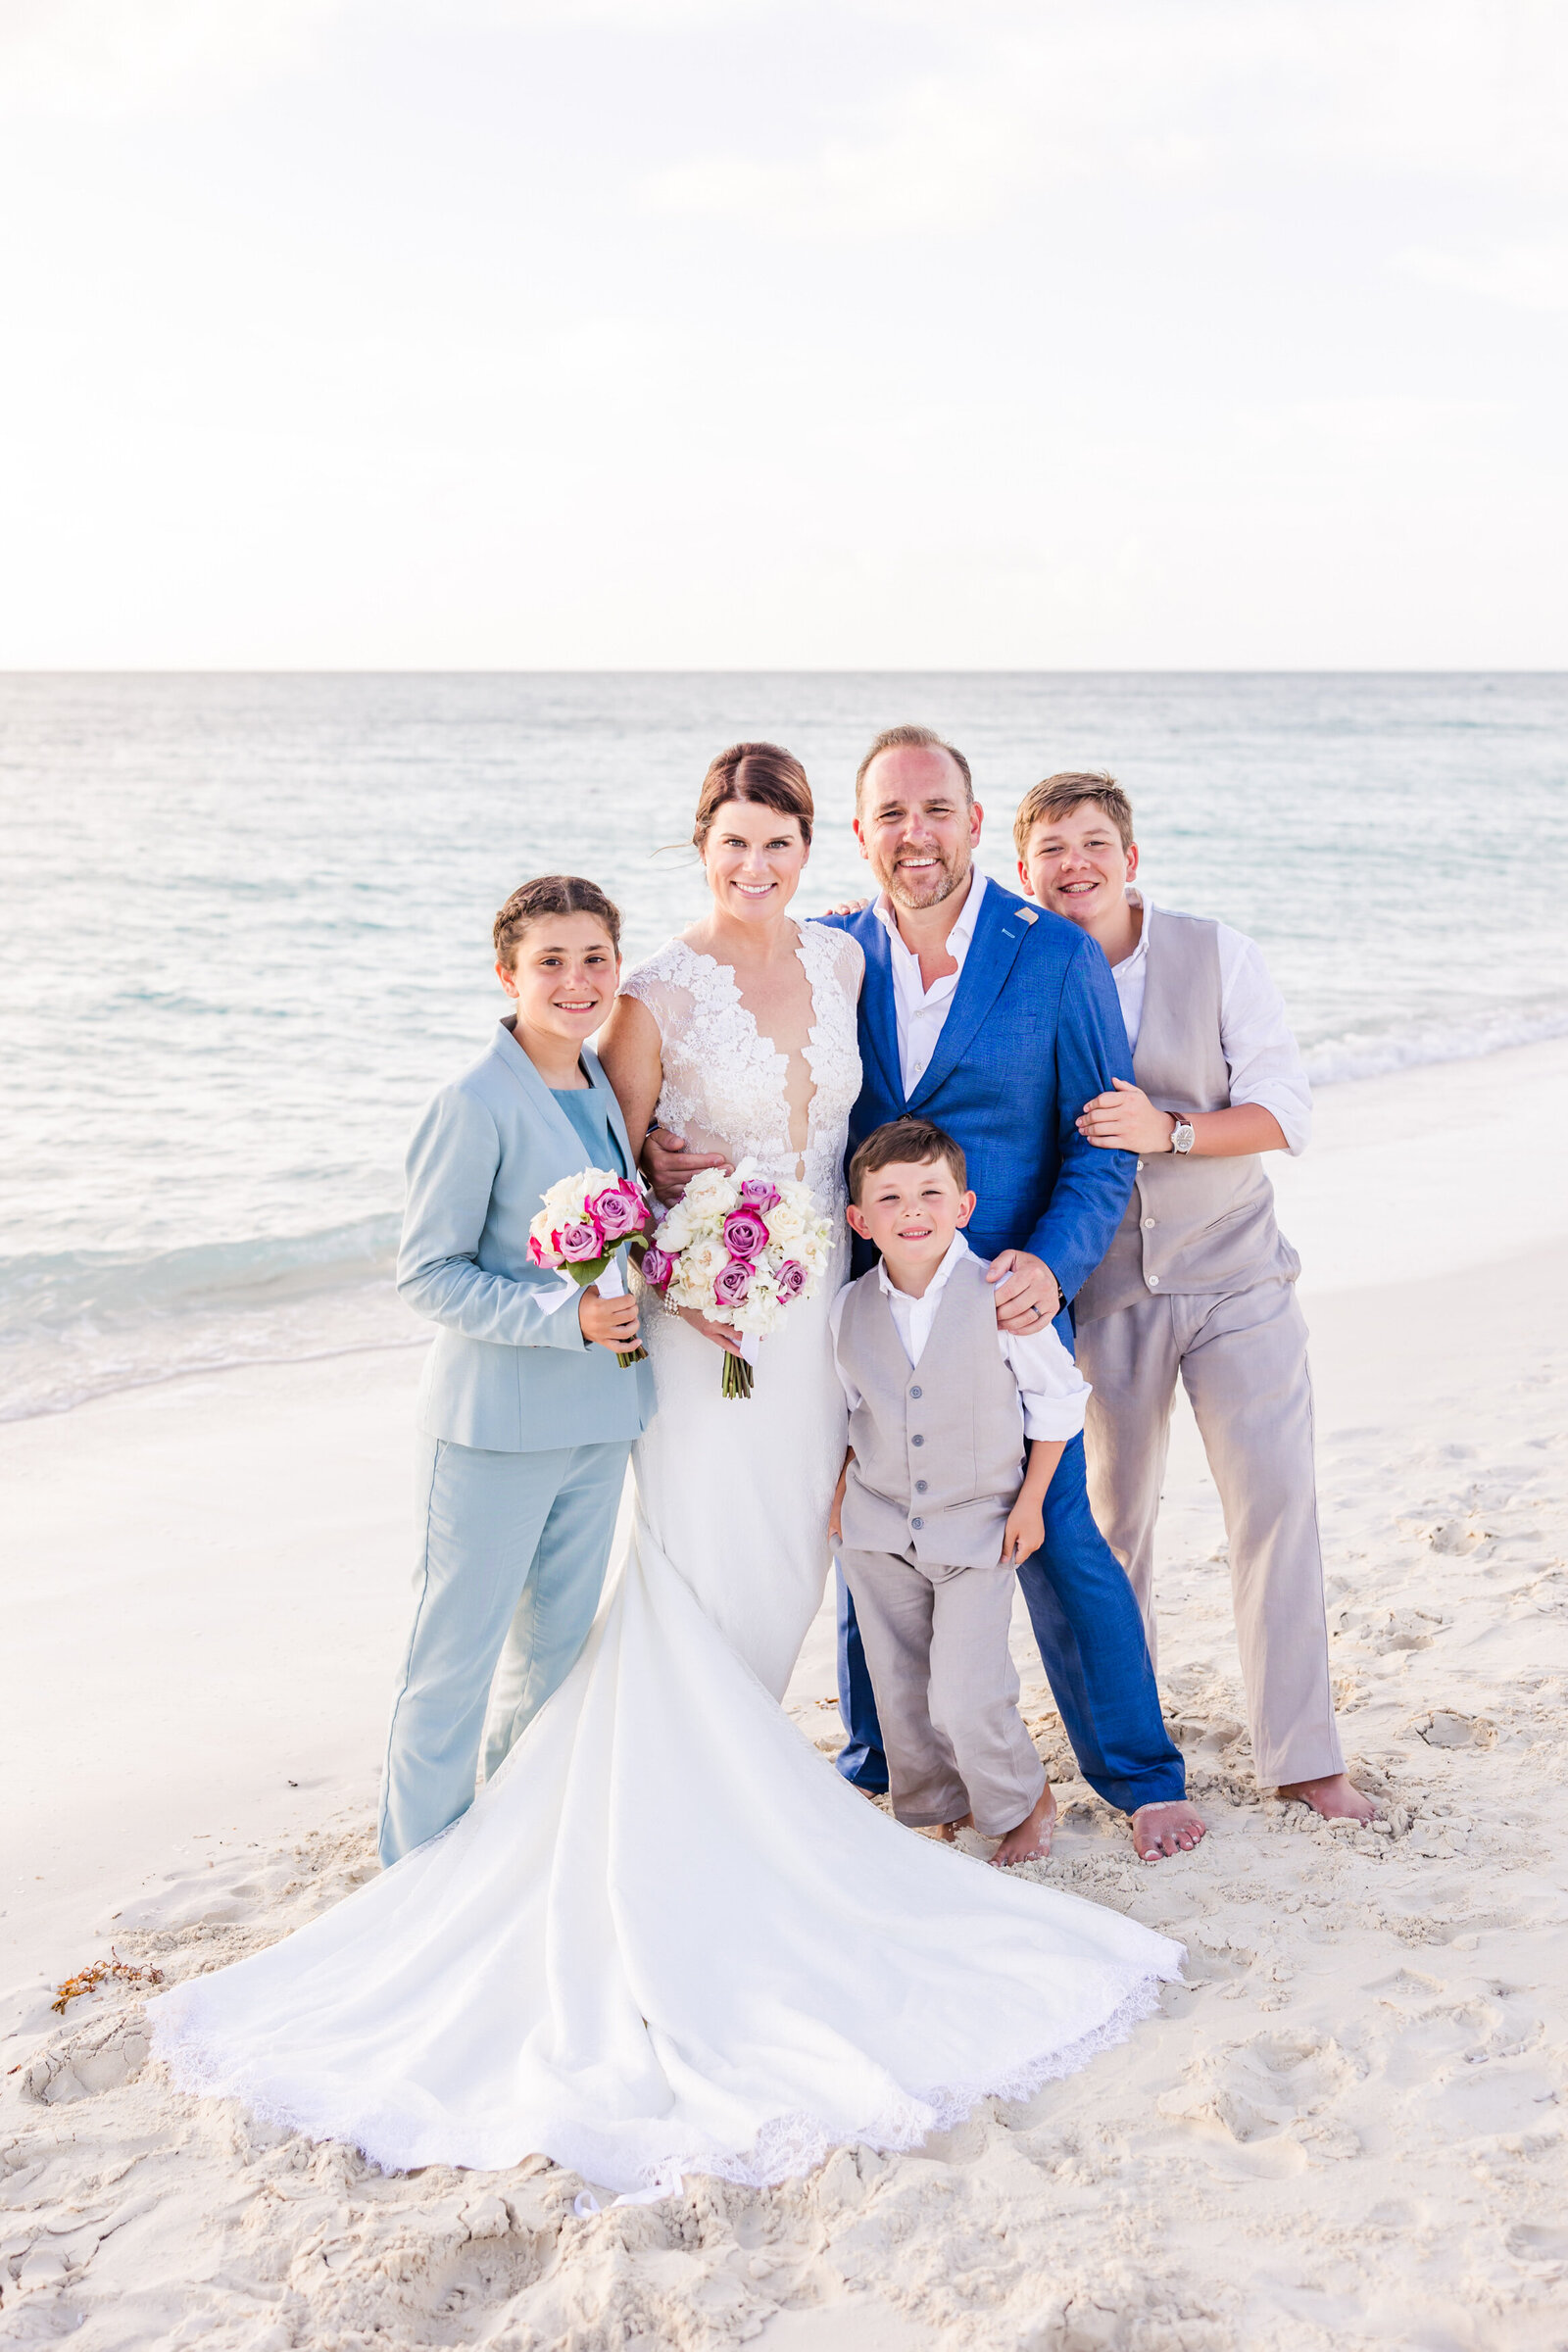 Beaches_Turks_and_Caicos_Destination_Wedding_Photographer_Gogats408